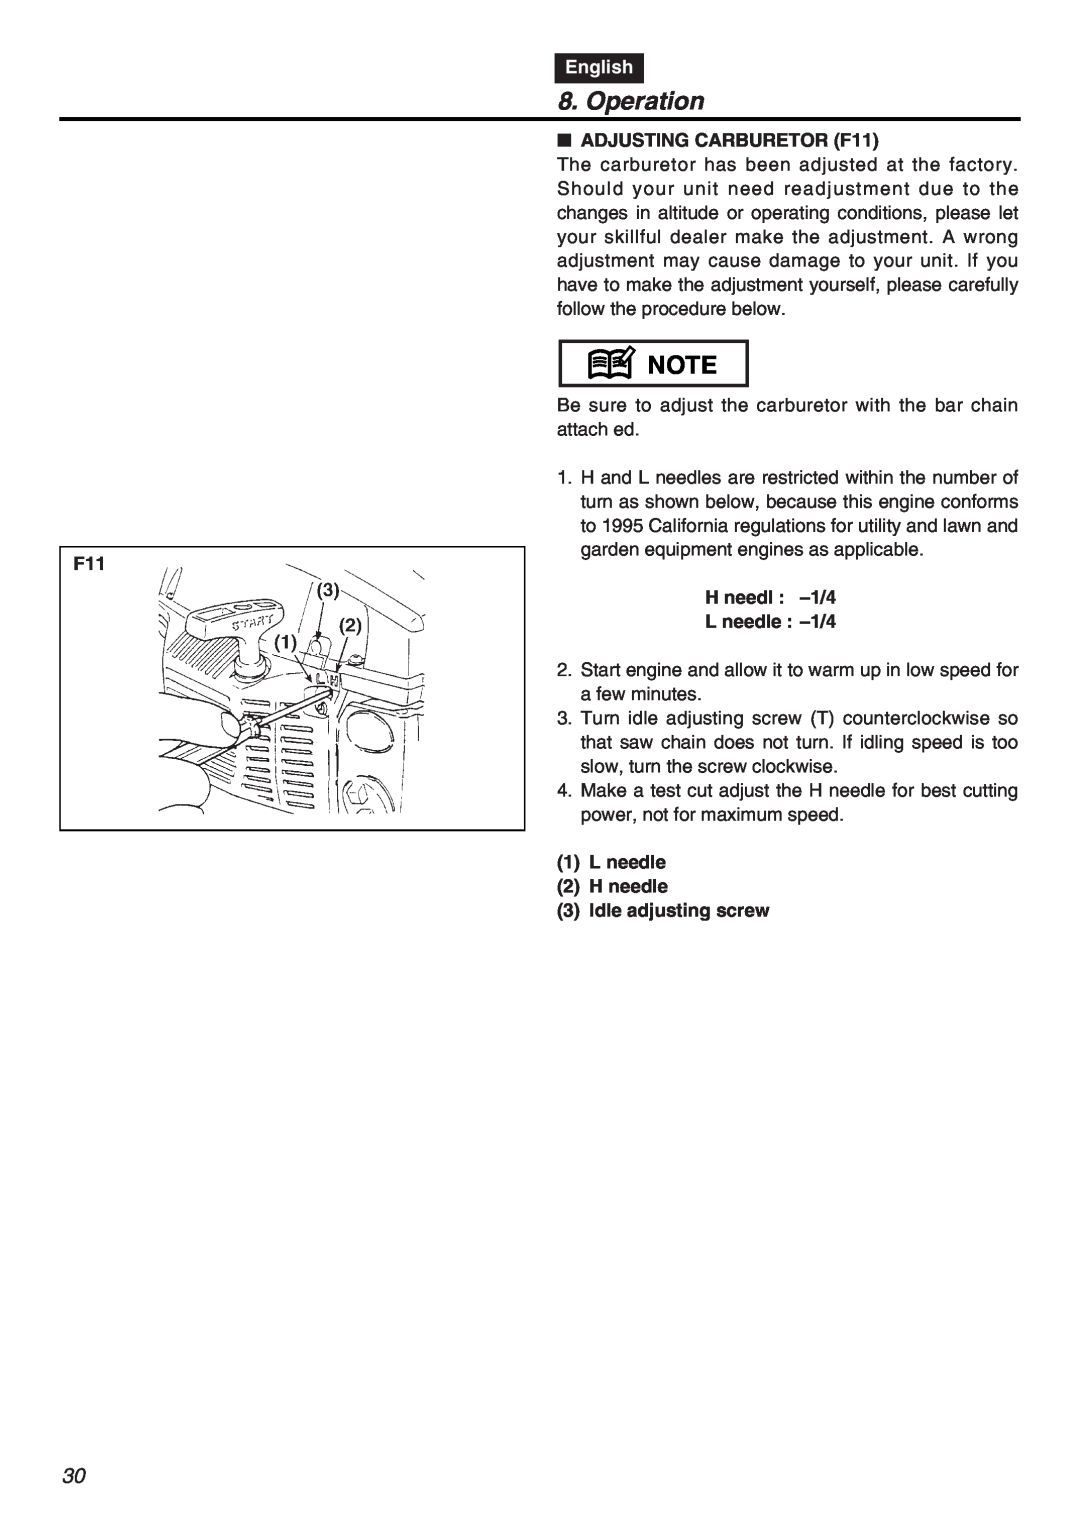 RedMax G5000AVS manual Operation, English, ADJUSTING CARBURETOR F11, H needl -1/4 L needle -1/4 